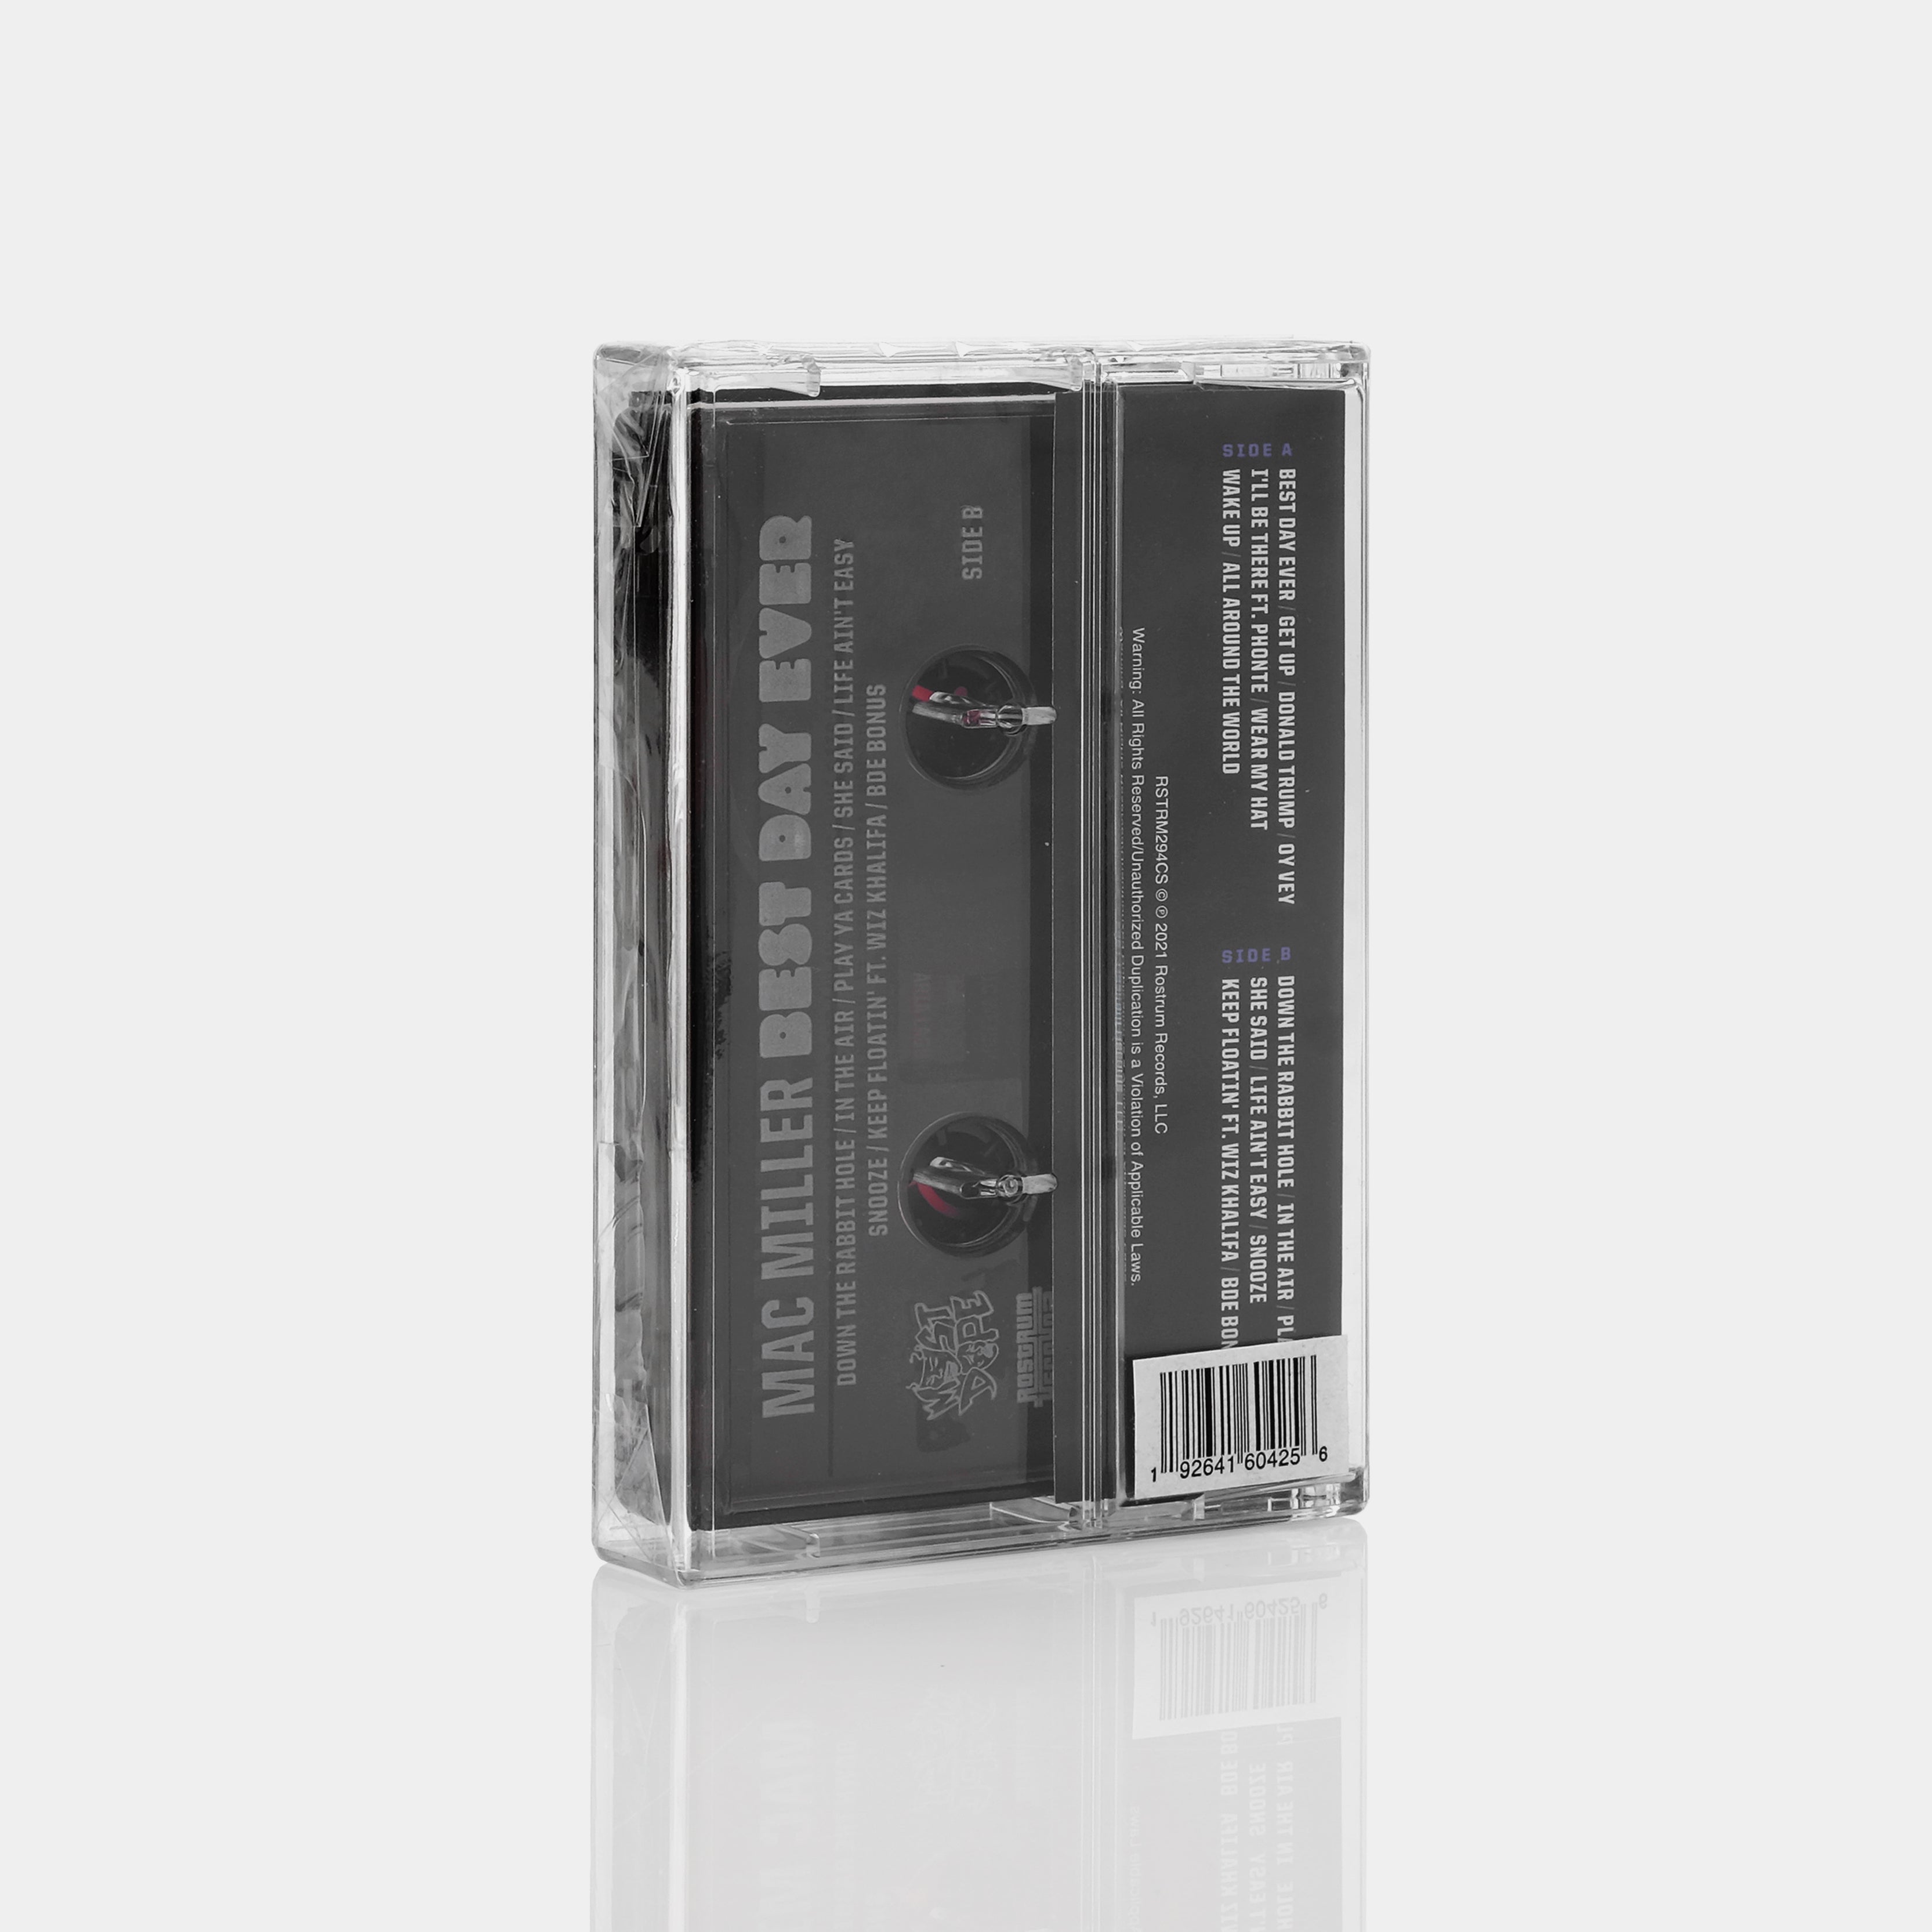 Mac Miller - Best Day Ever Cassette Tape